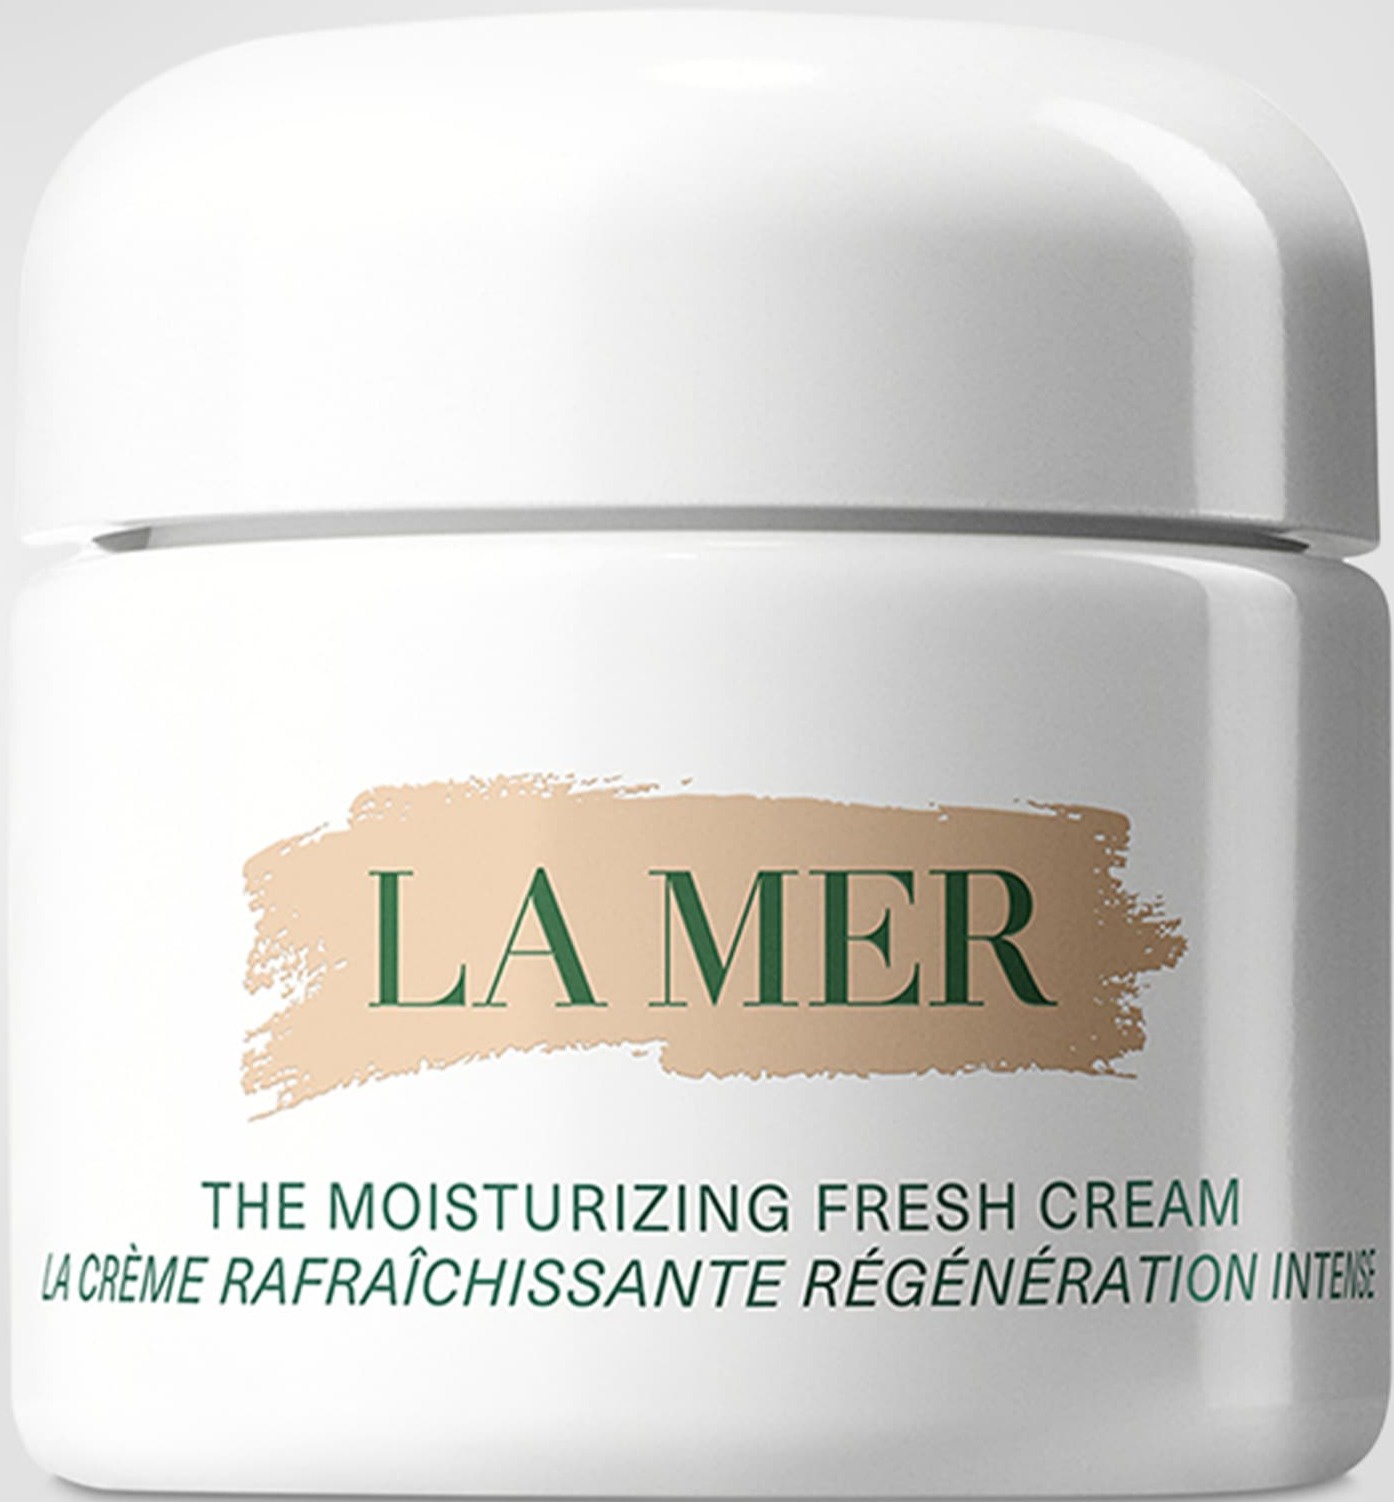 La Mer The Moisturizing Fresh Cream